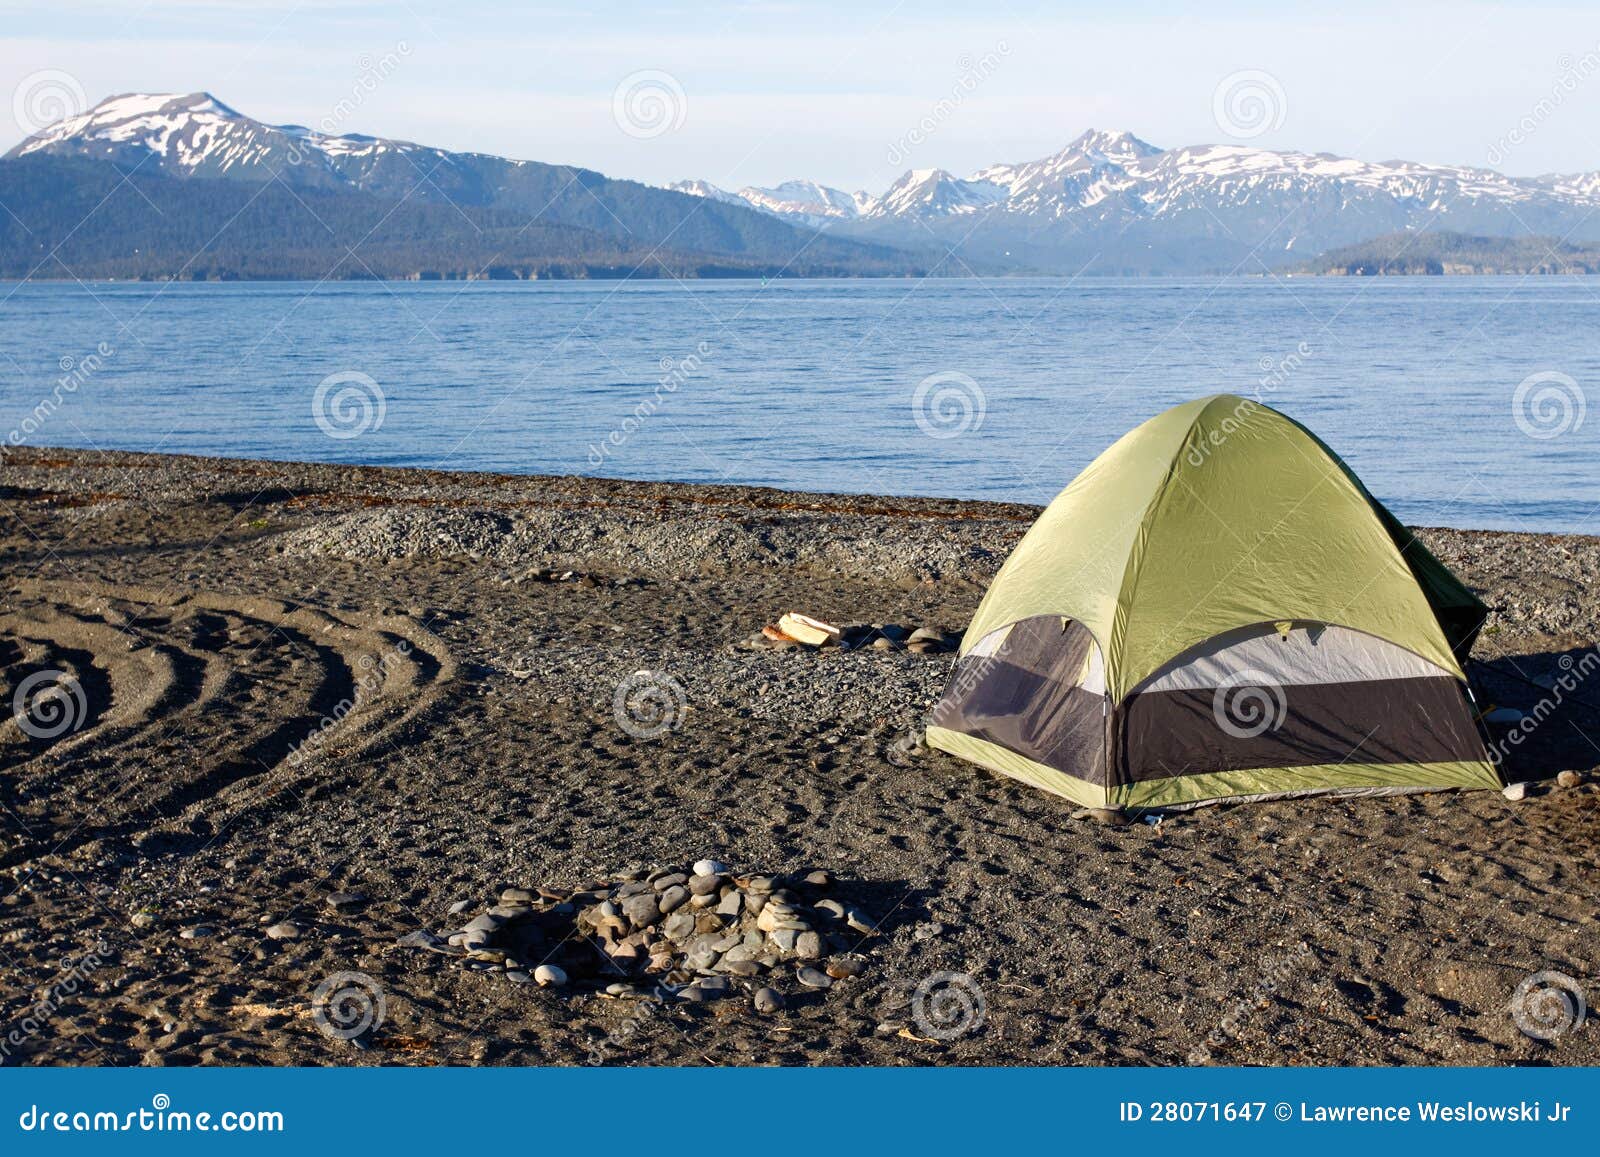 alaska - homer spit tent camping